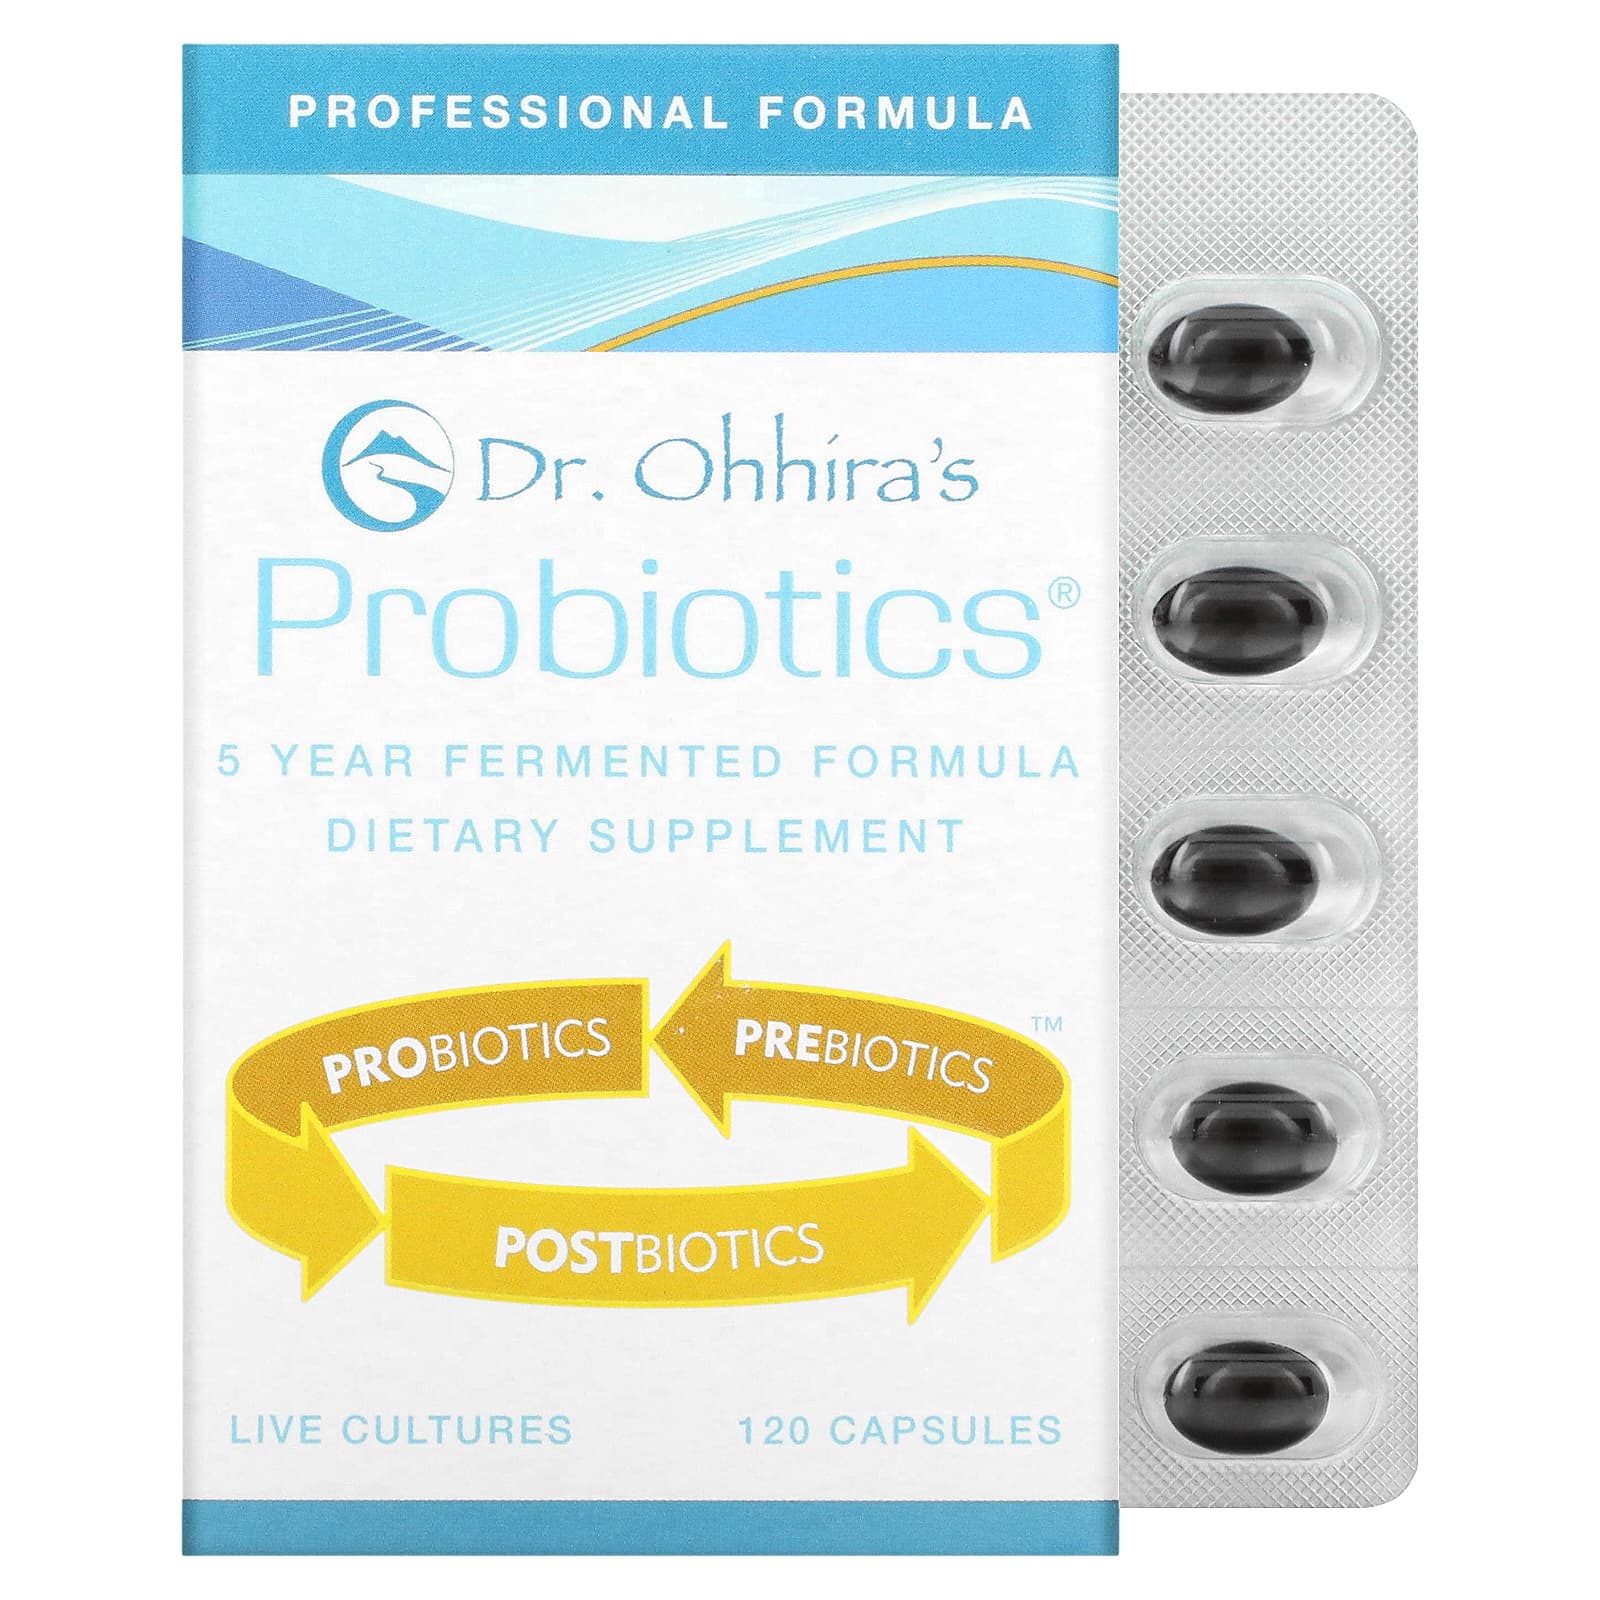 Dr. Ohhira's Essential Formulas Inc. Professional Formula Probiotics 120 капсул пробиотики dr ohhira s essential formulas inc 60 капсул